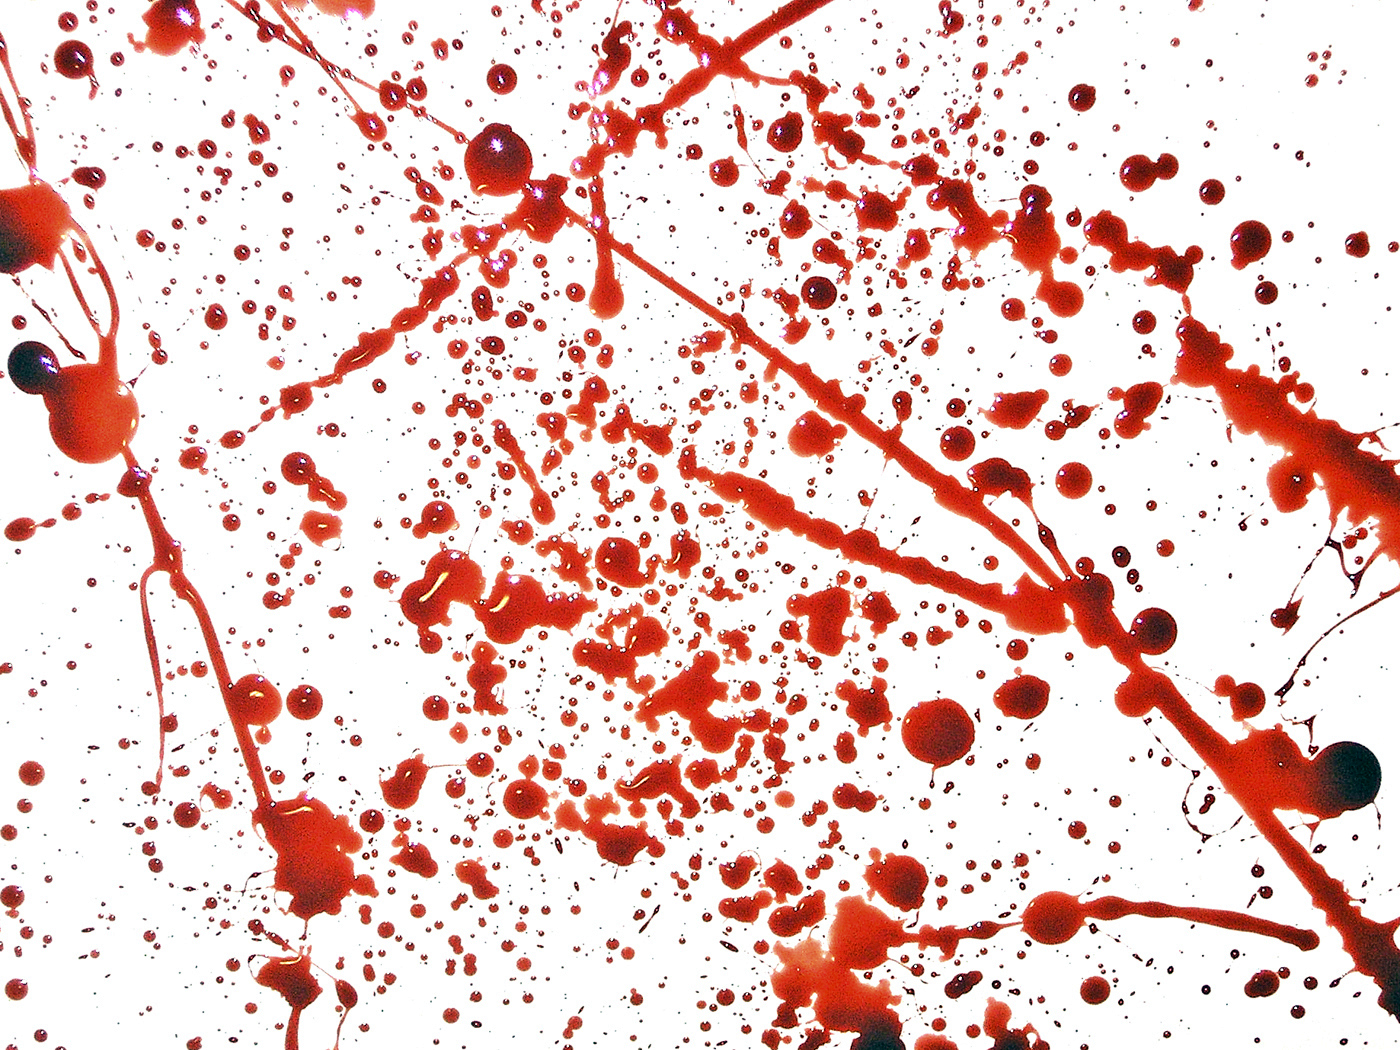 Blood Splatter Wallpaper PicsWallpapercom